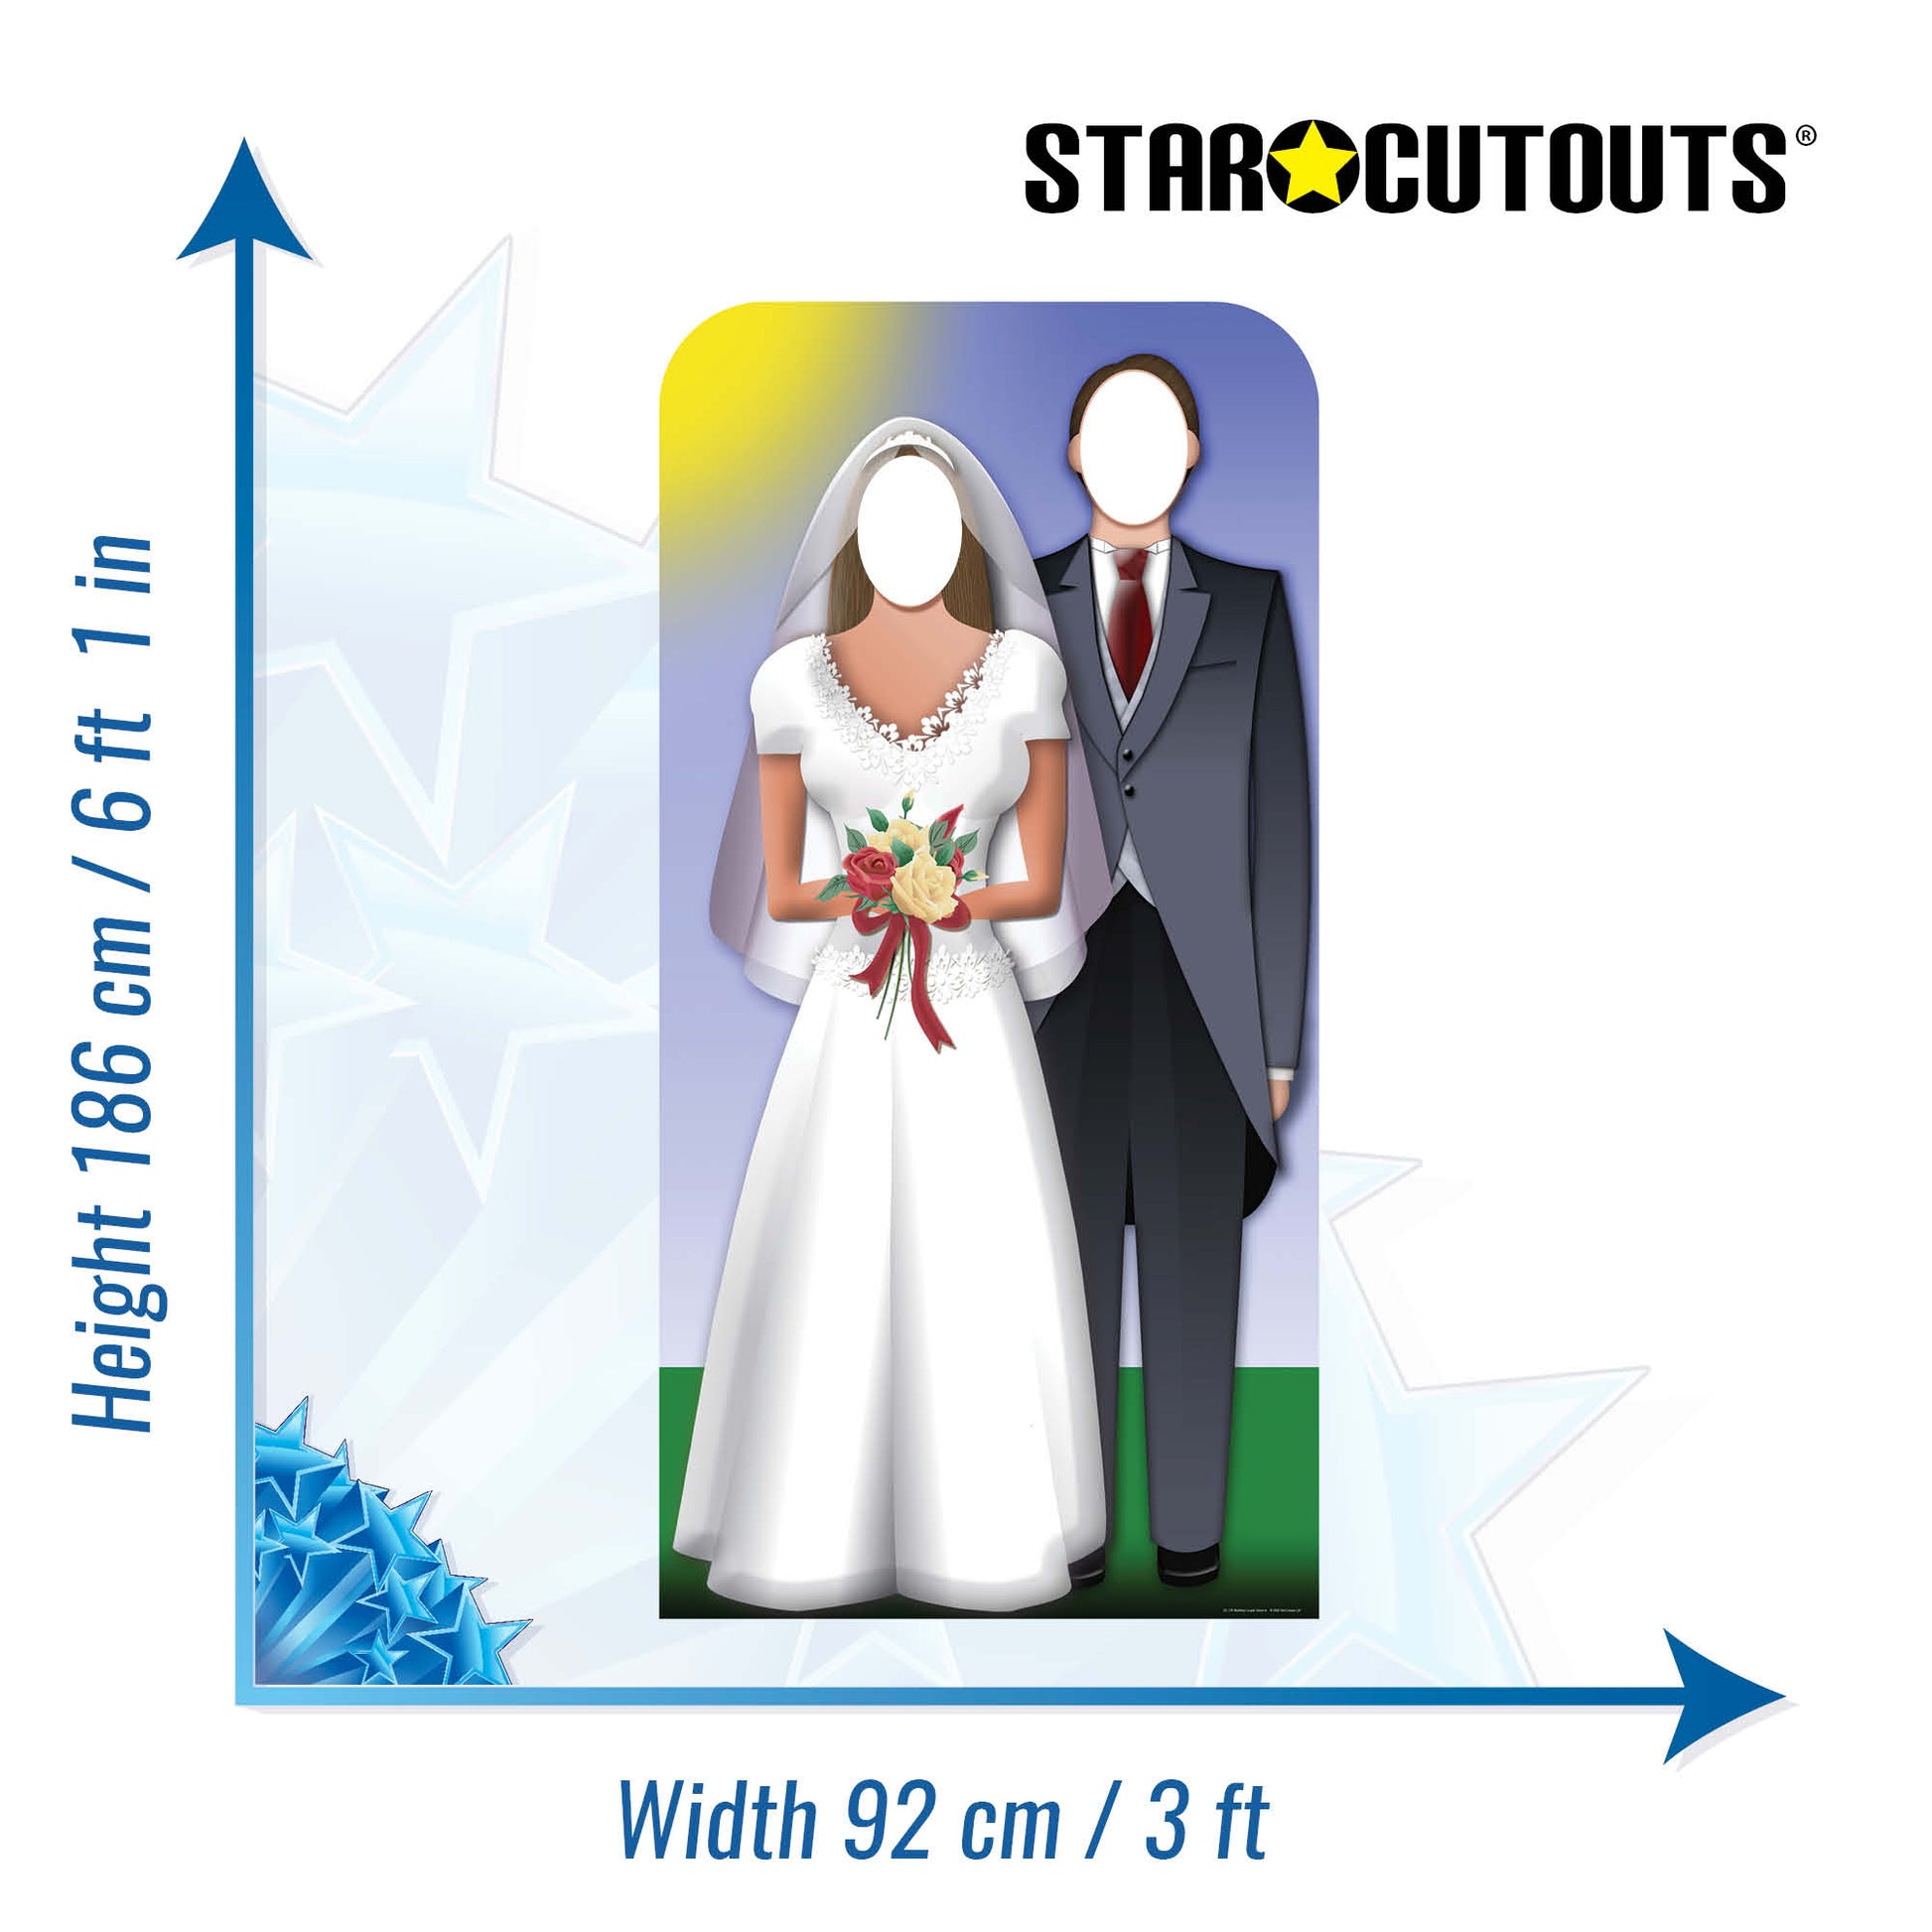 Wedding Couple Stand-In Cardboard Cutout